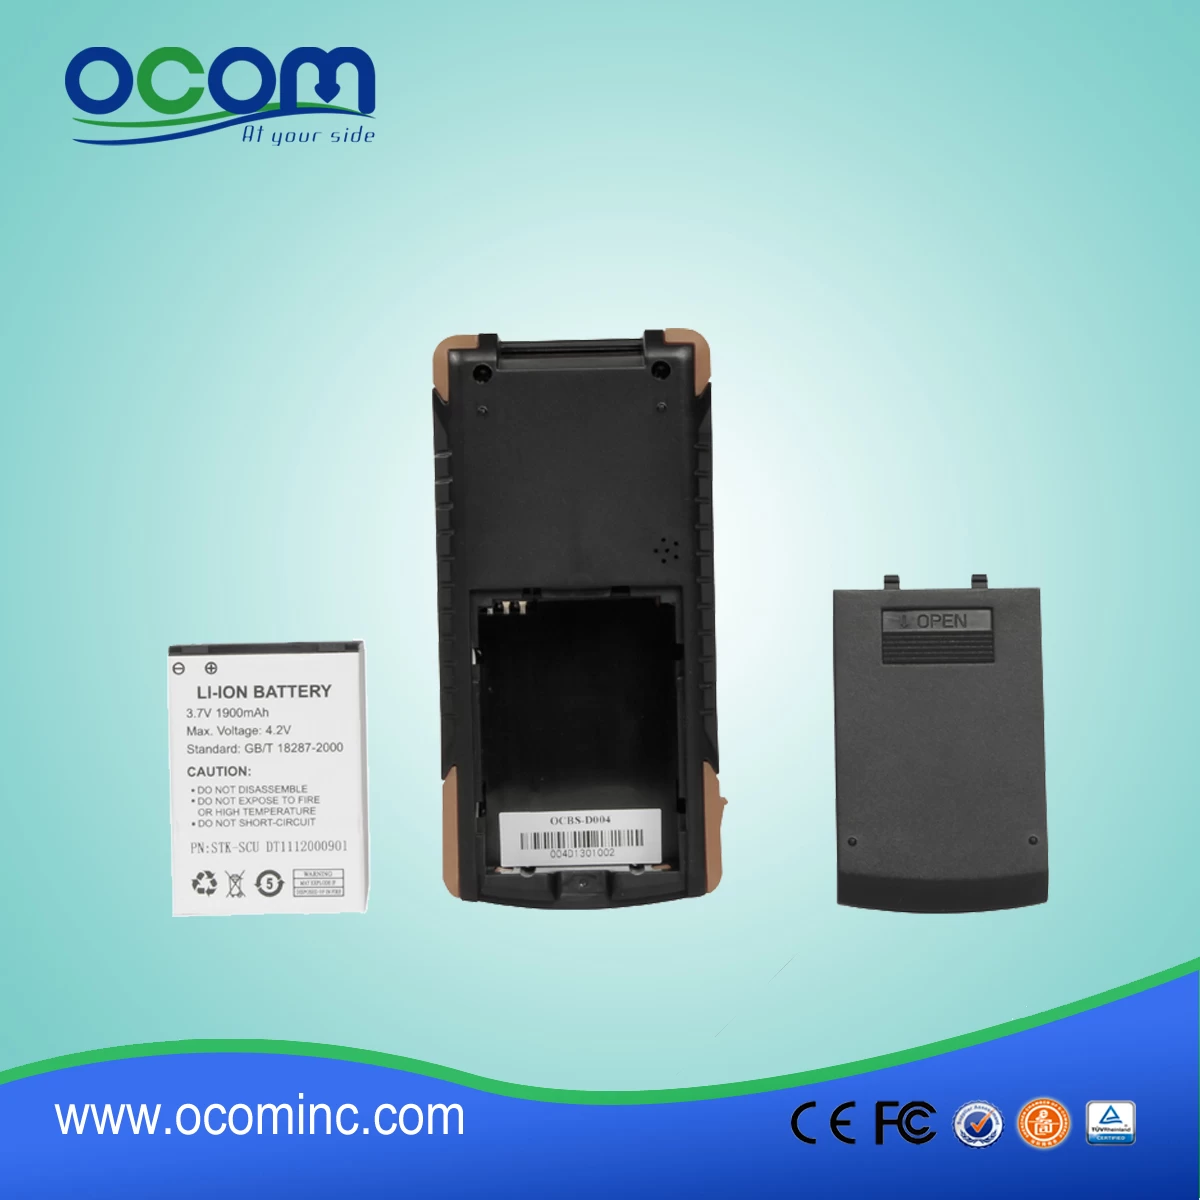 OCBS-D105 handheld barcode scanner bluetooth